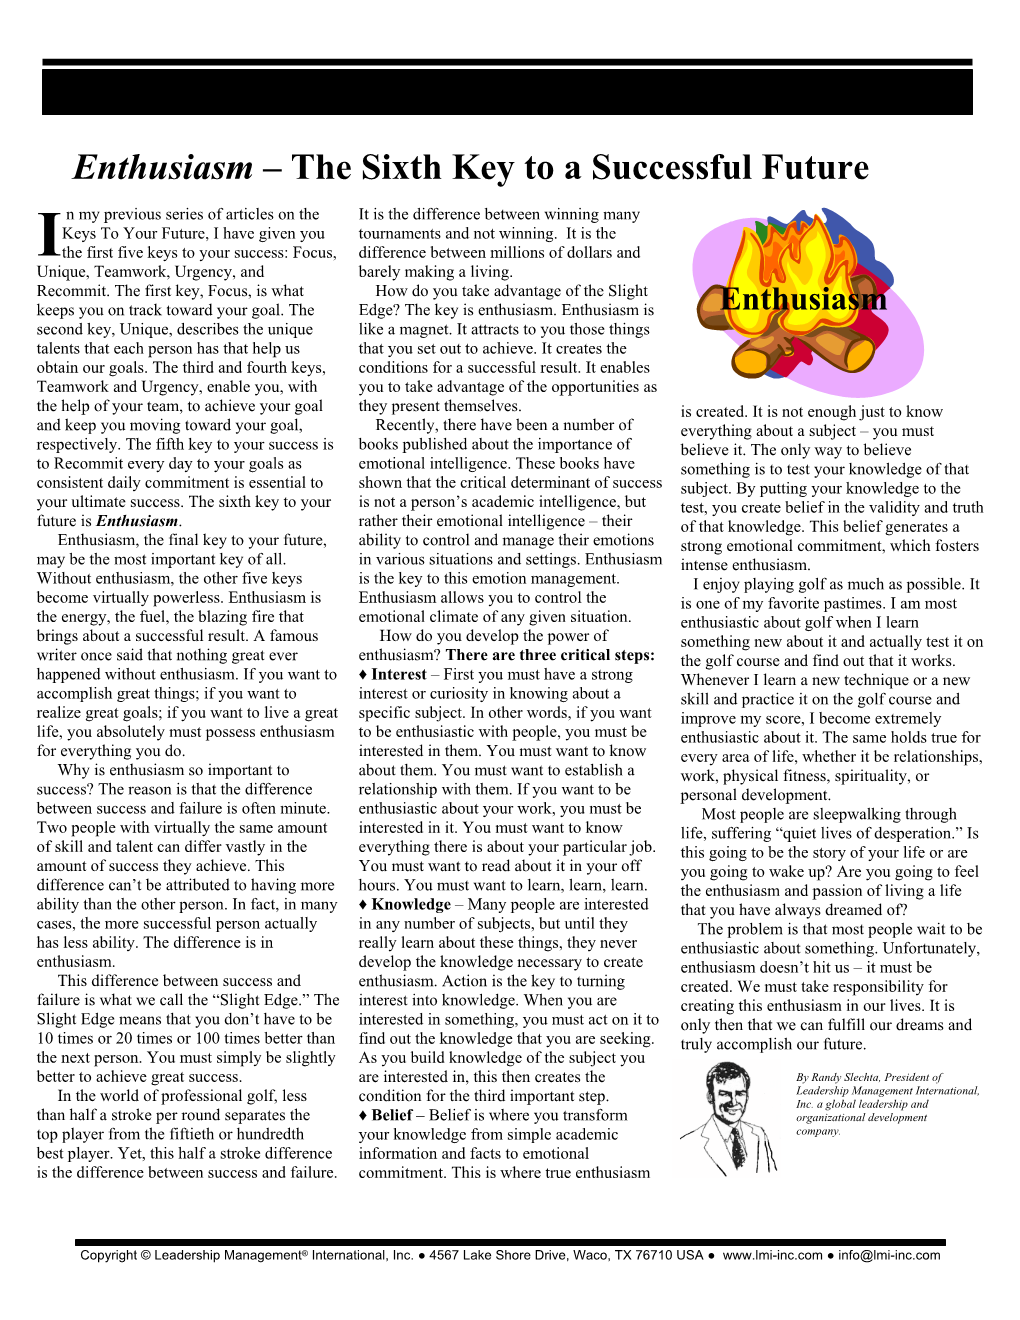 Enthusiasm – the Sixth Key to a Successful Future